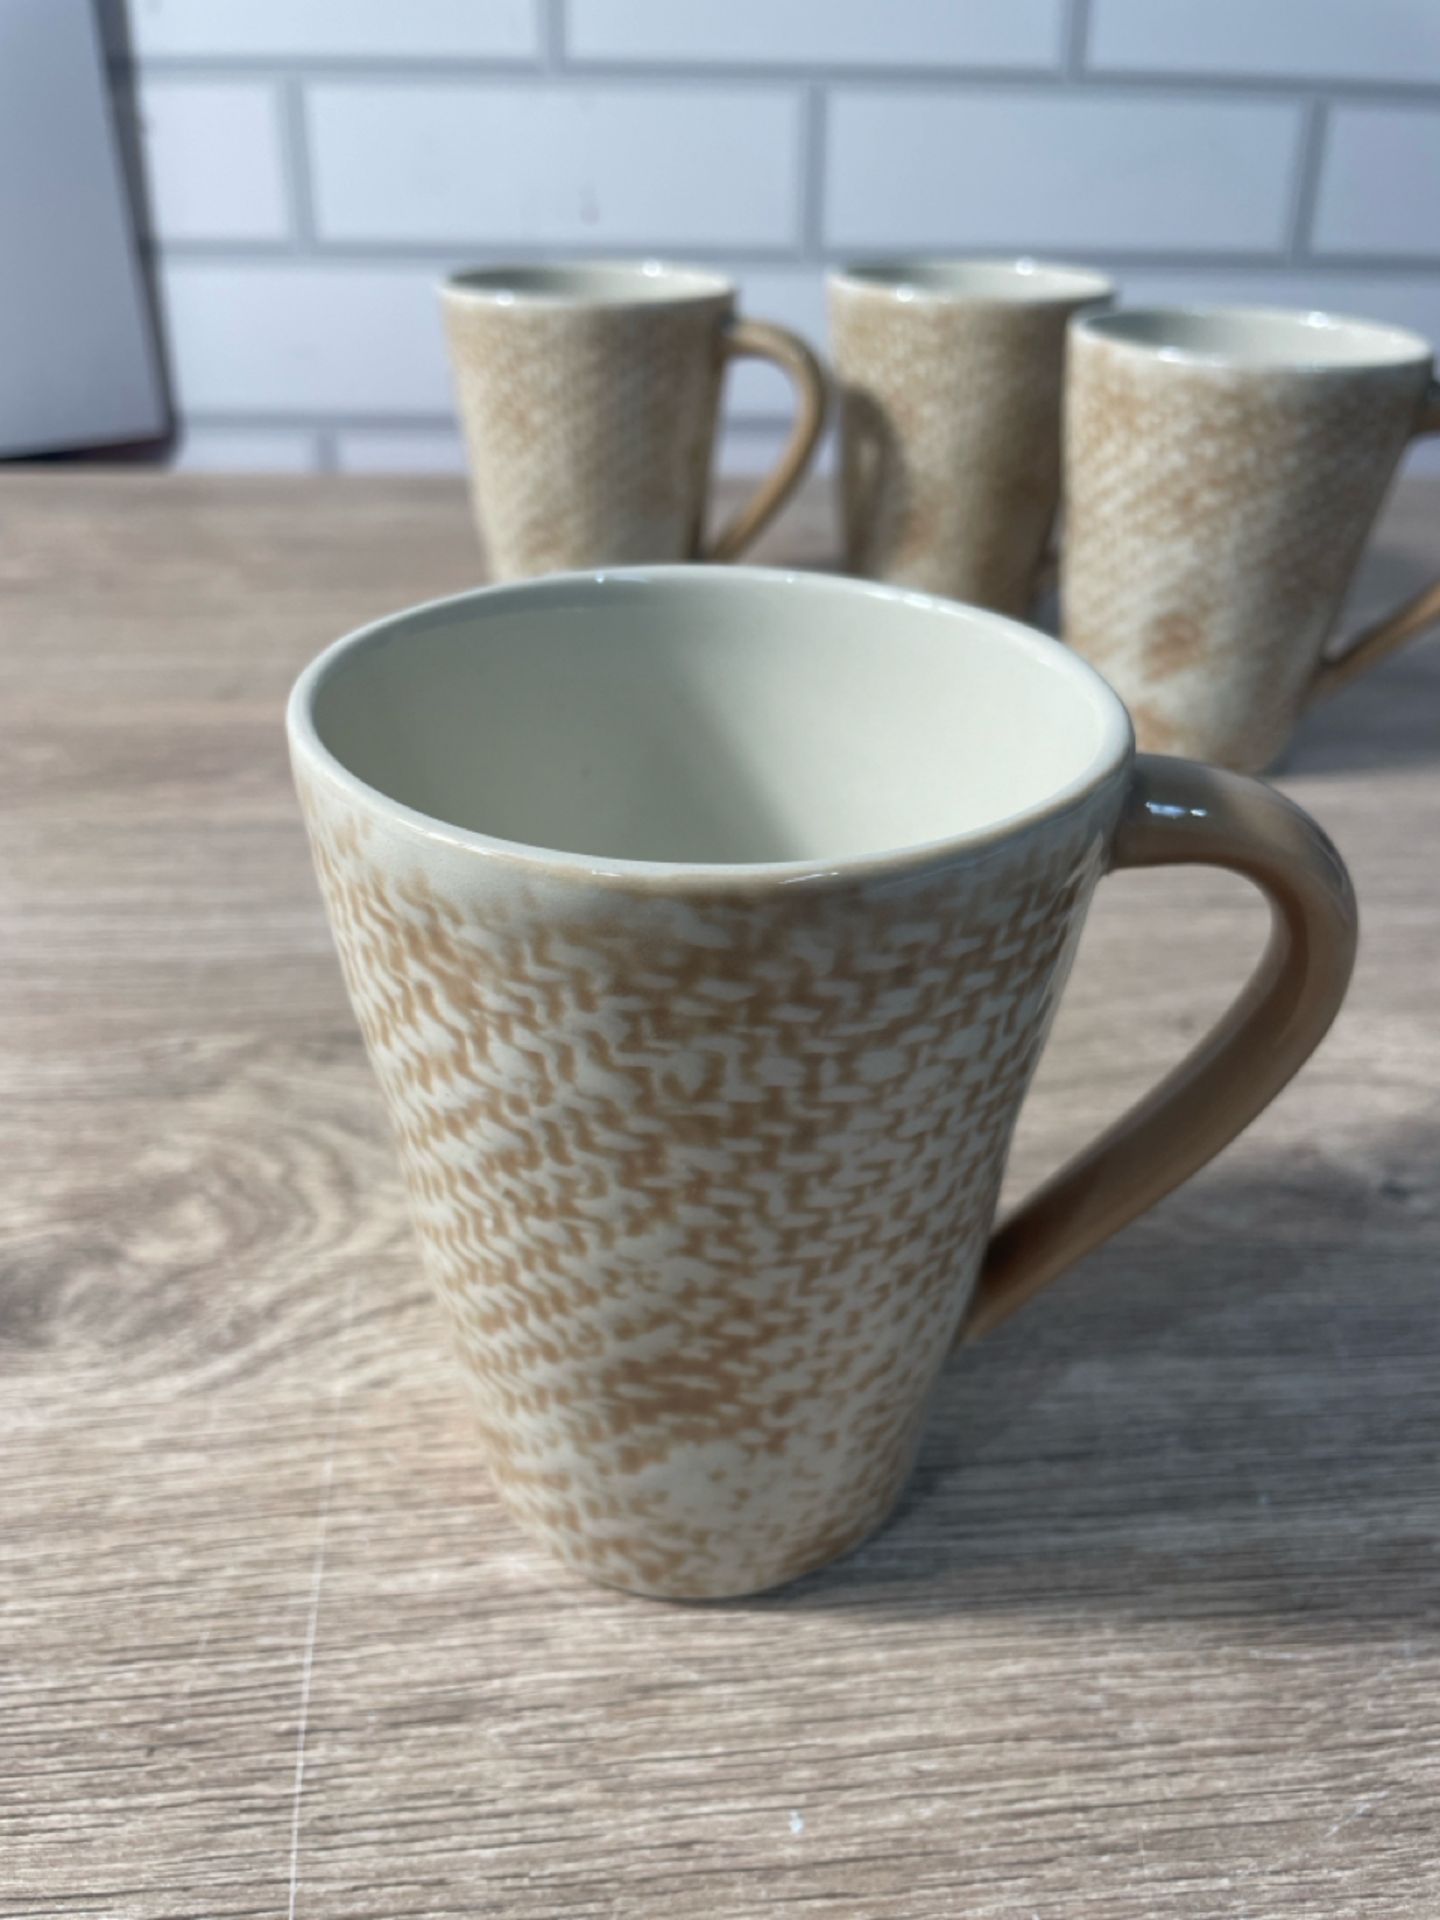 Dalton Tea/Coffee Mug x 4 - Image 2 of 3